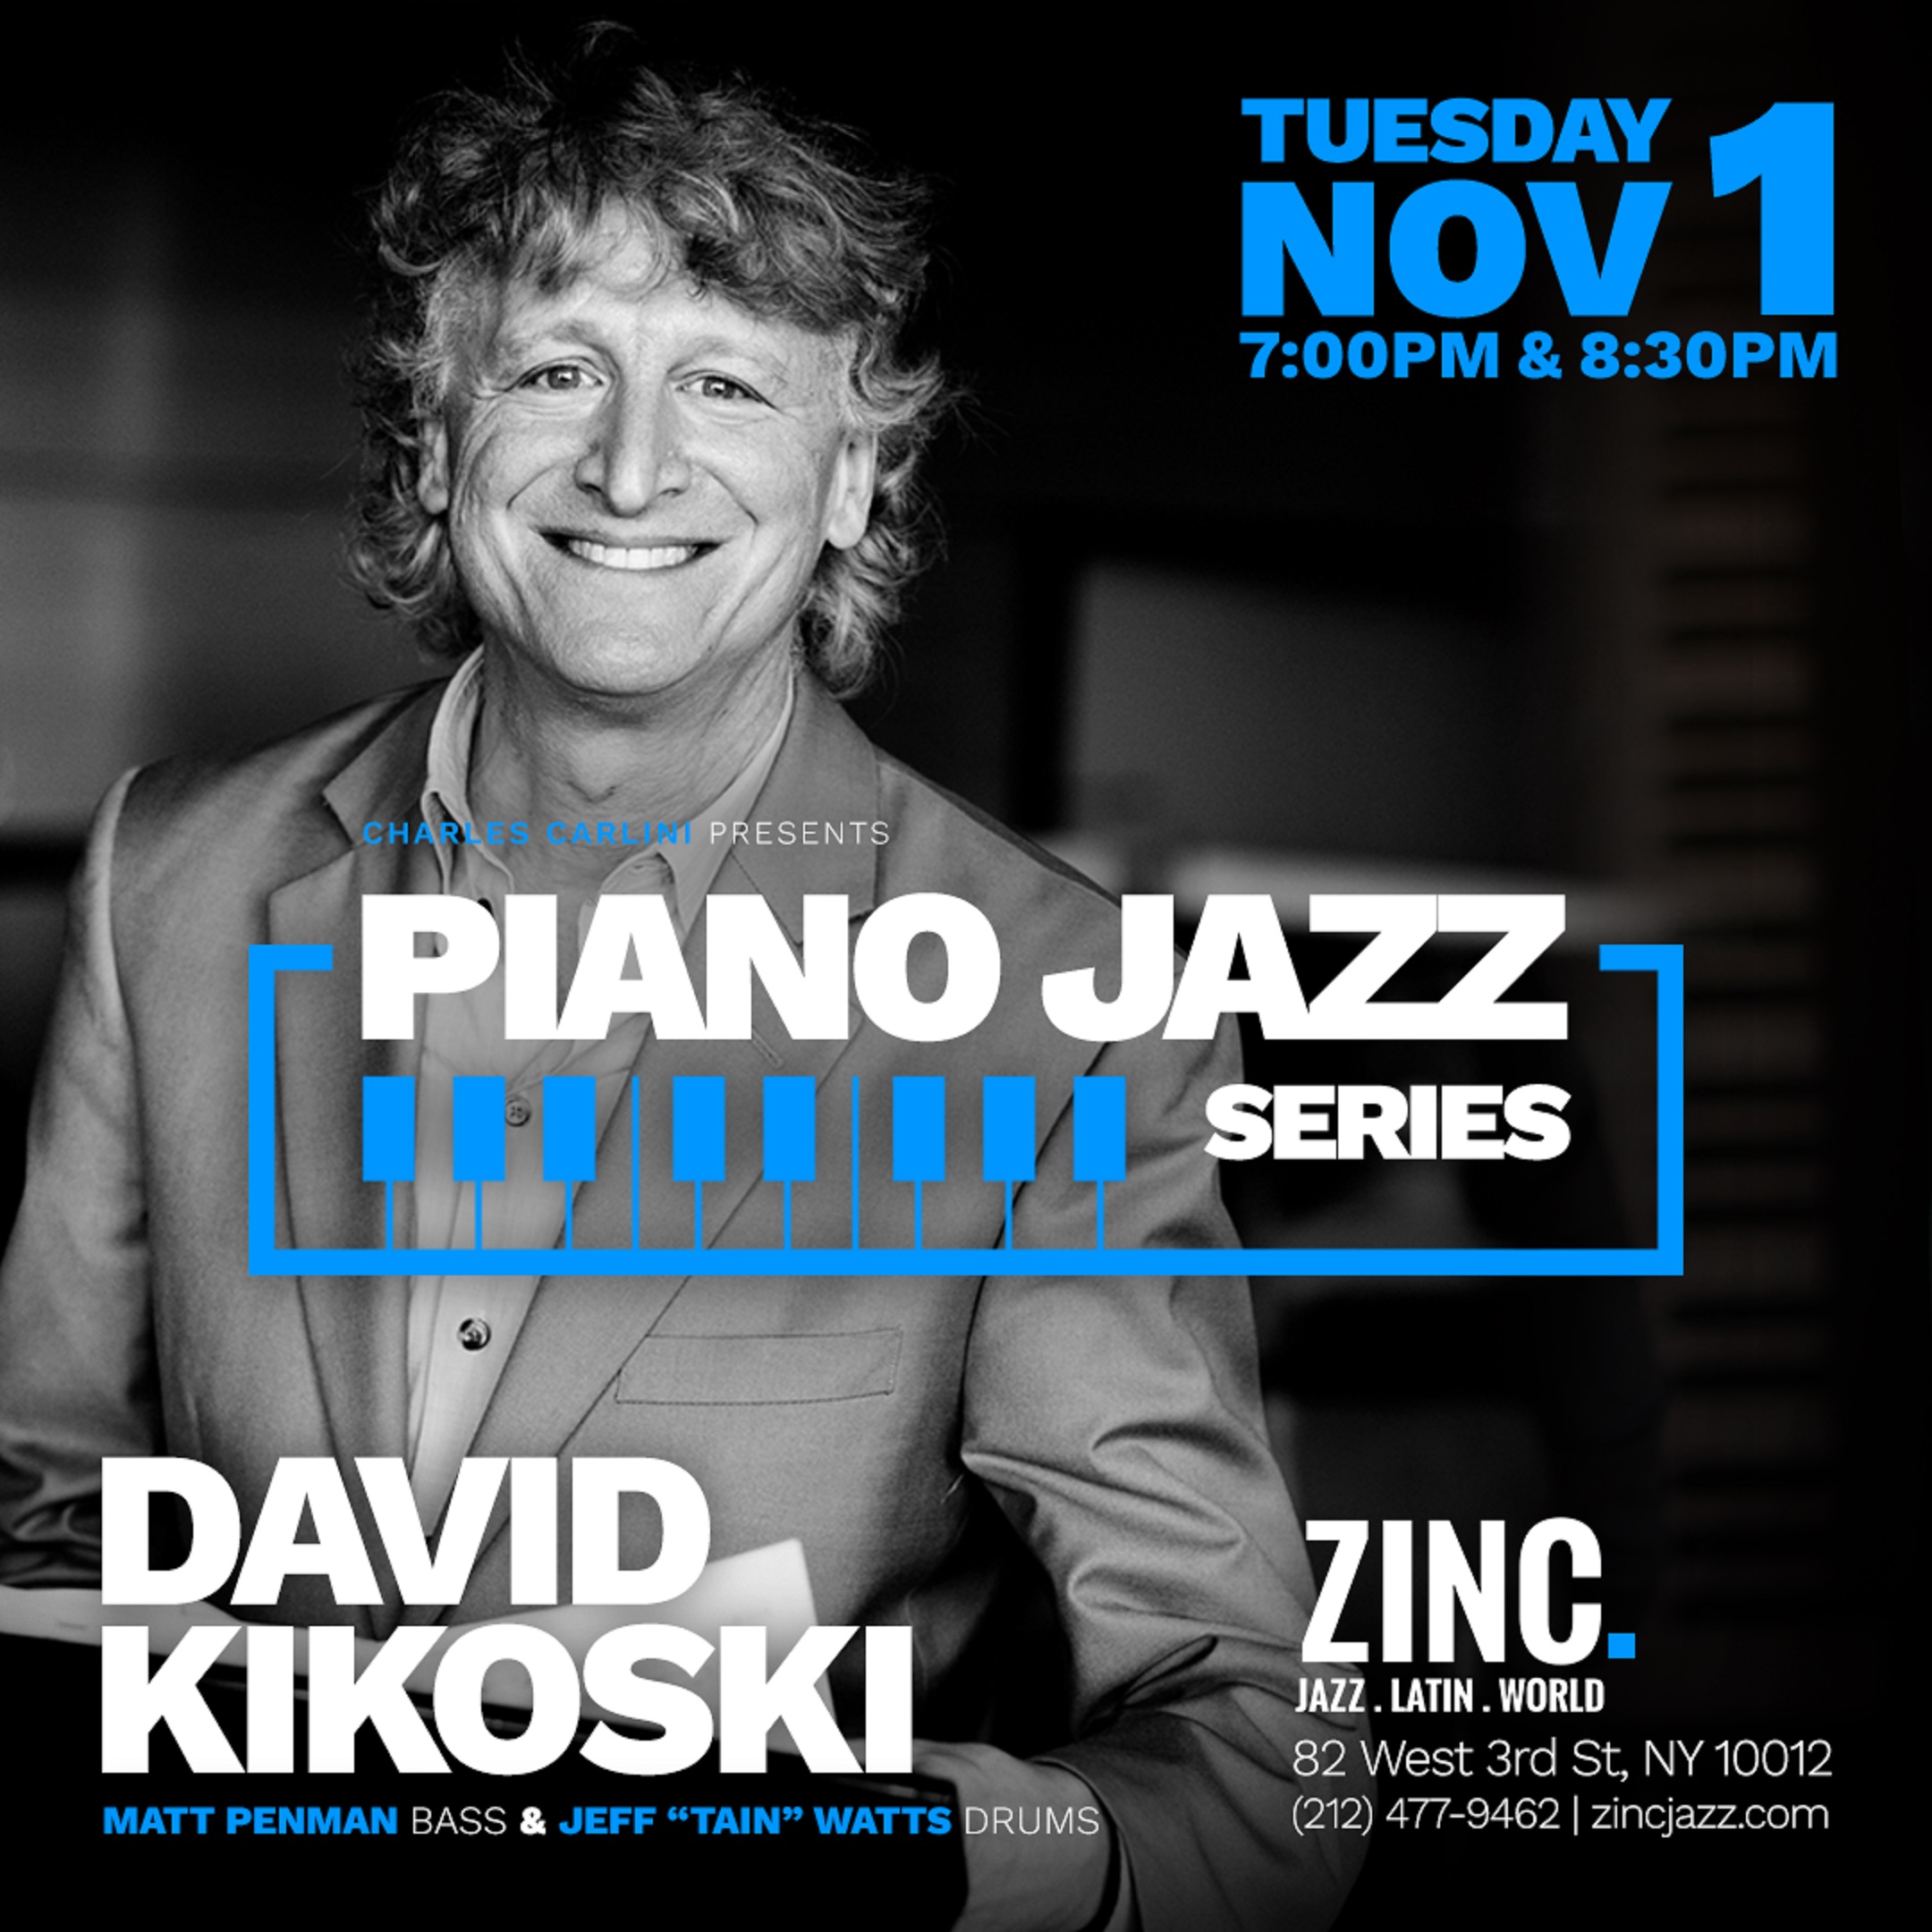 Catch Piano Virtuoso David Kikoski at Zinc on Tuesday, Nov. 1